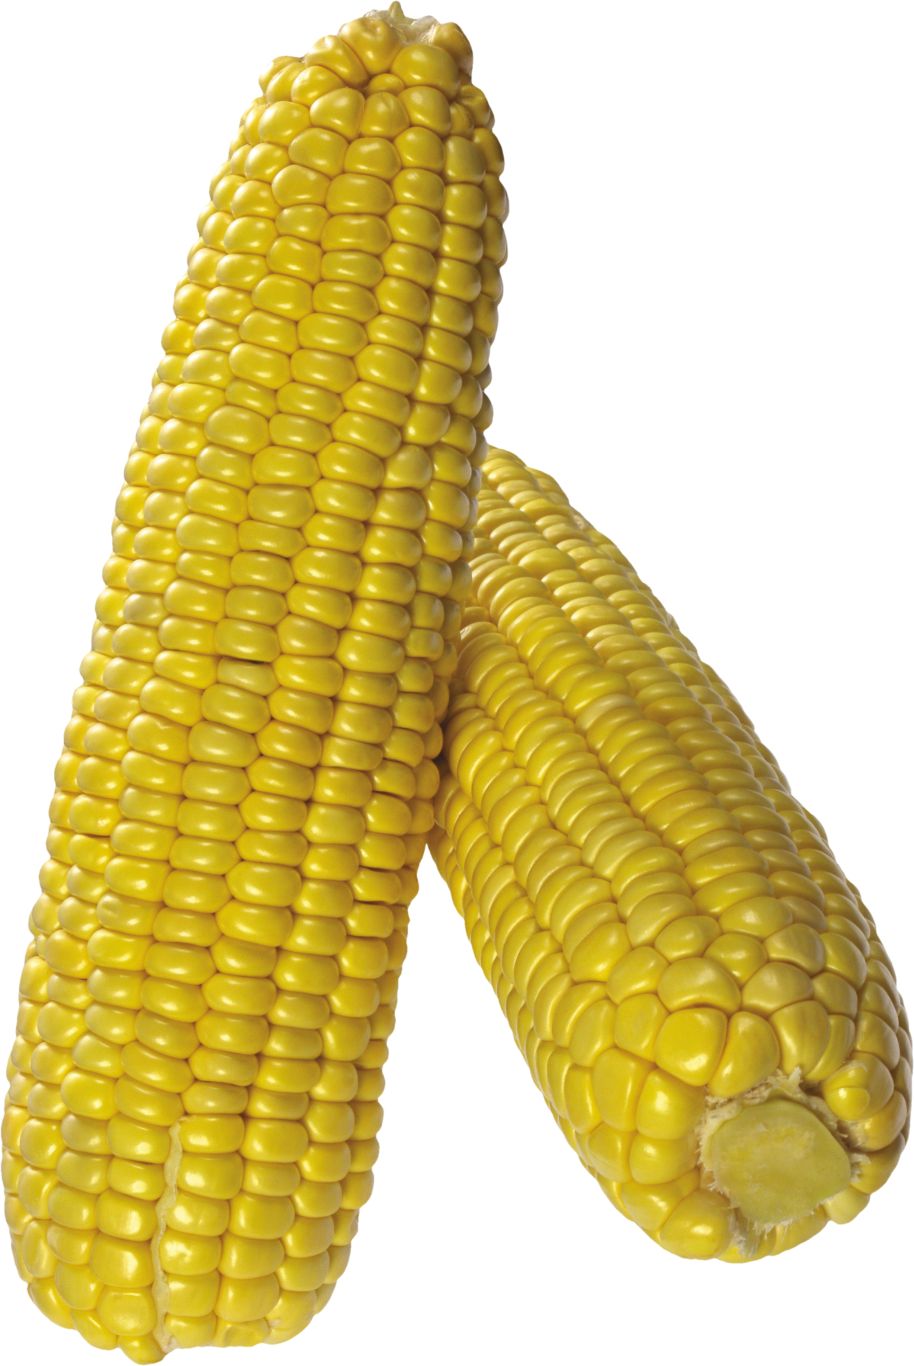 Corn PNG image    图片编号:5276